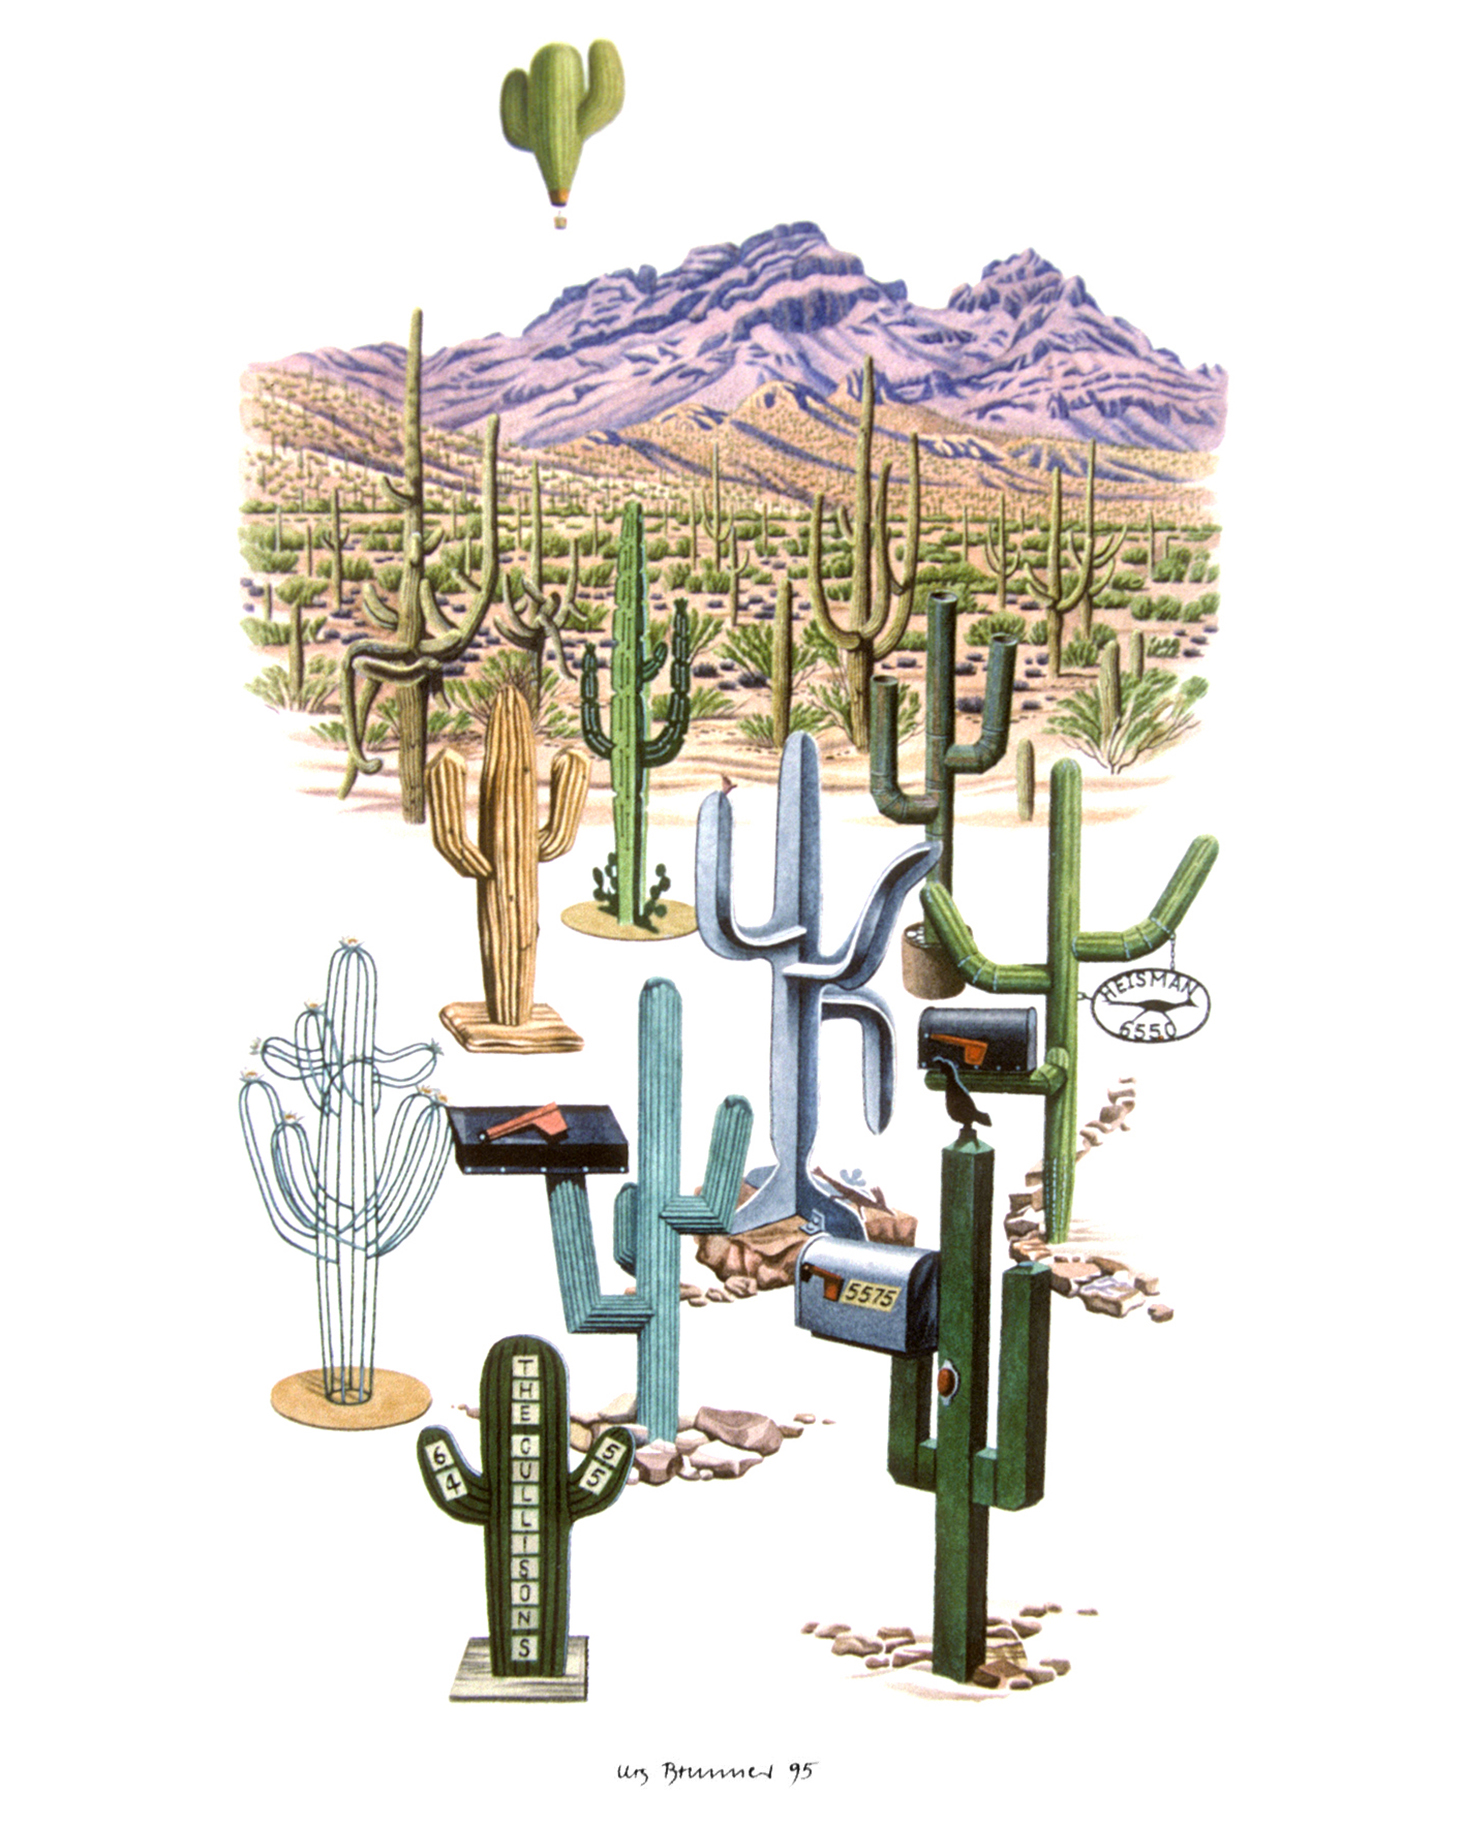 Saguaro-Zeichen ll, 1995, Aquarell auf Papier, 37 x 25 cm